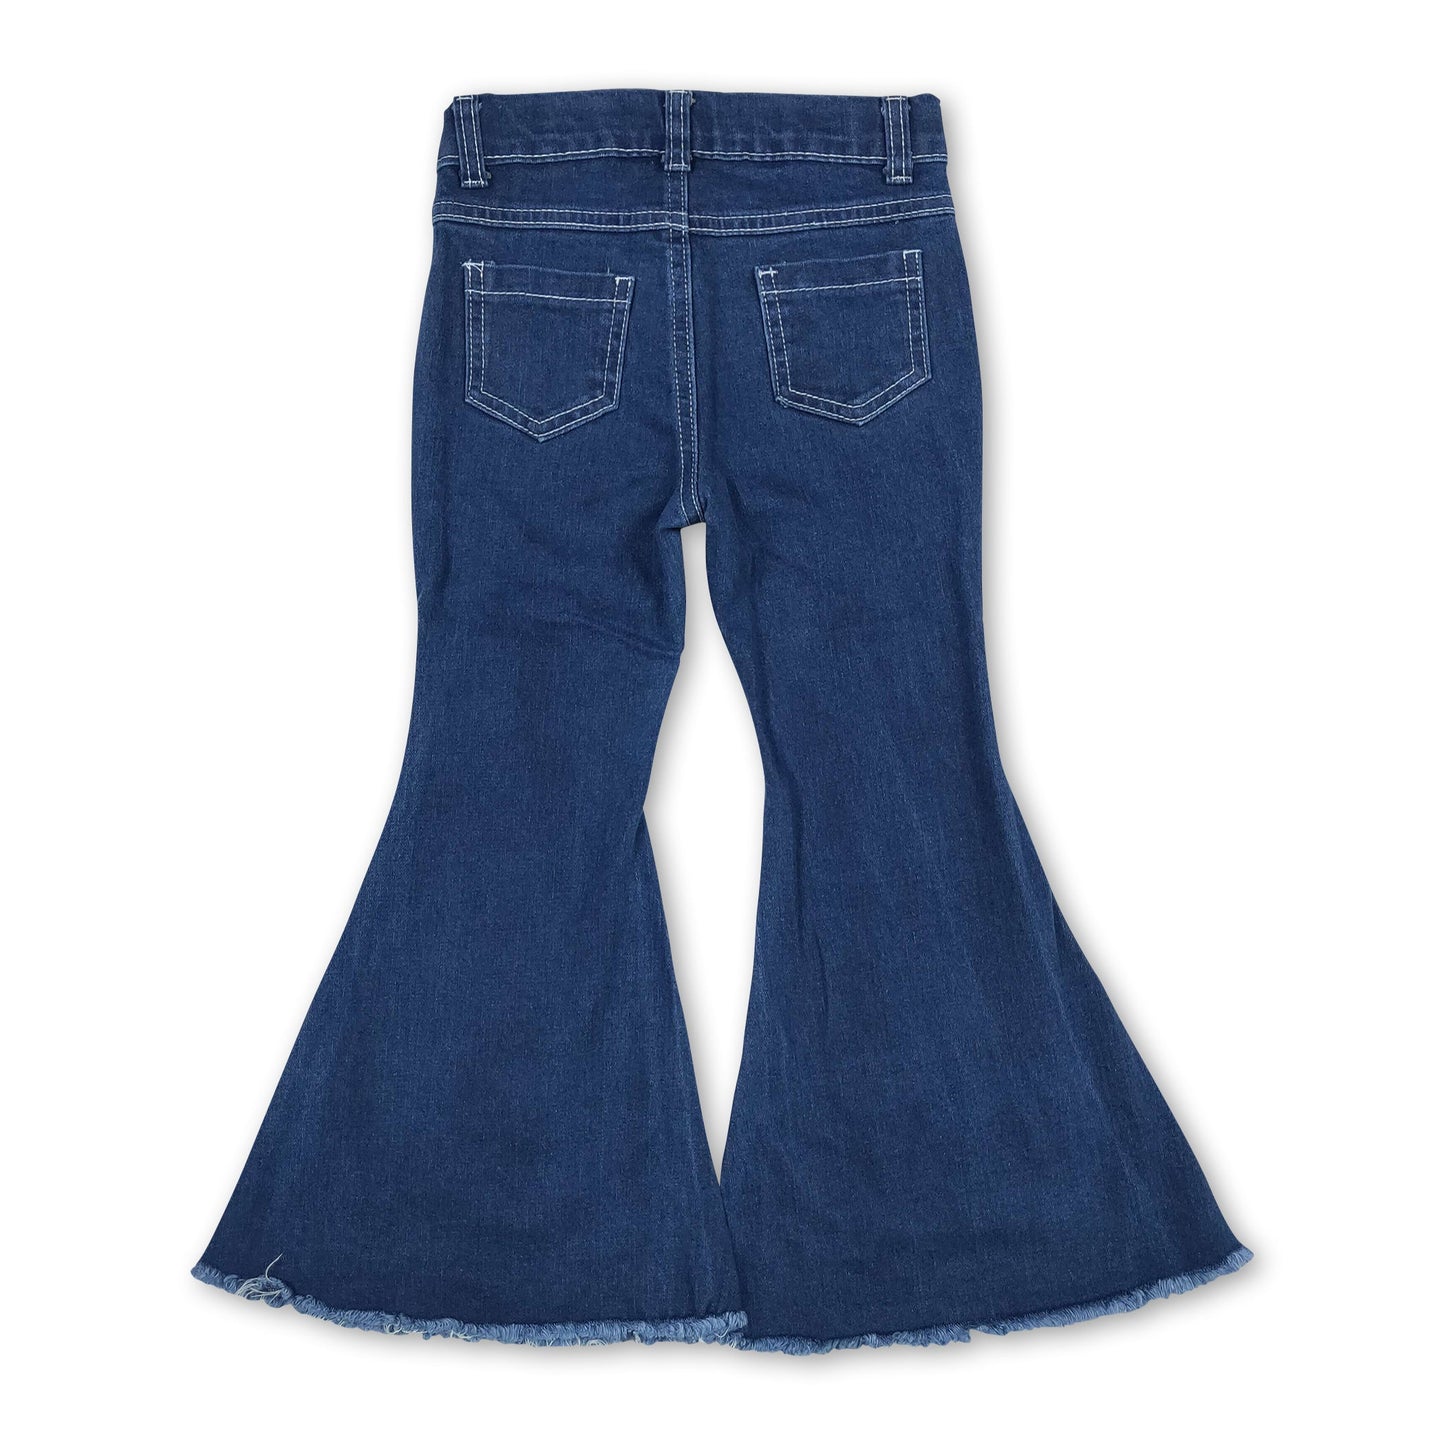 Blue flare jeans girls denim pants